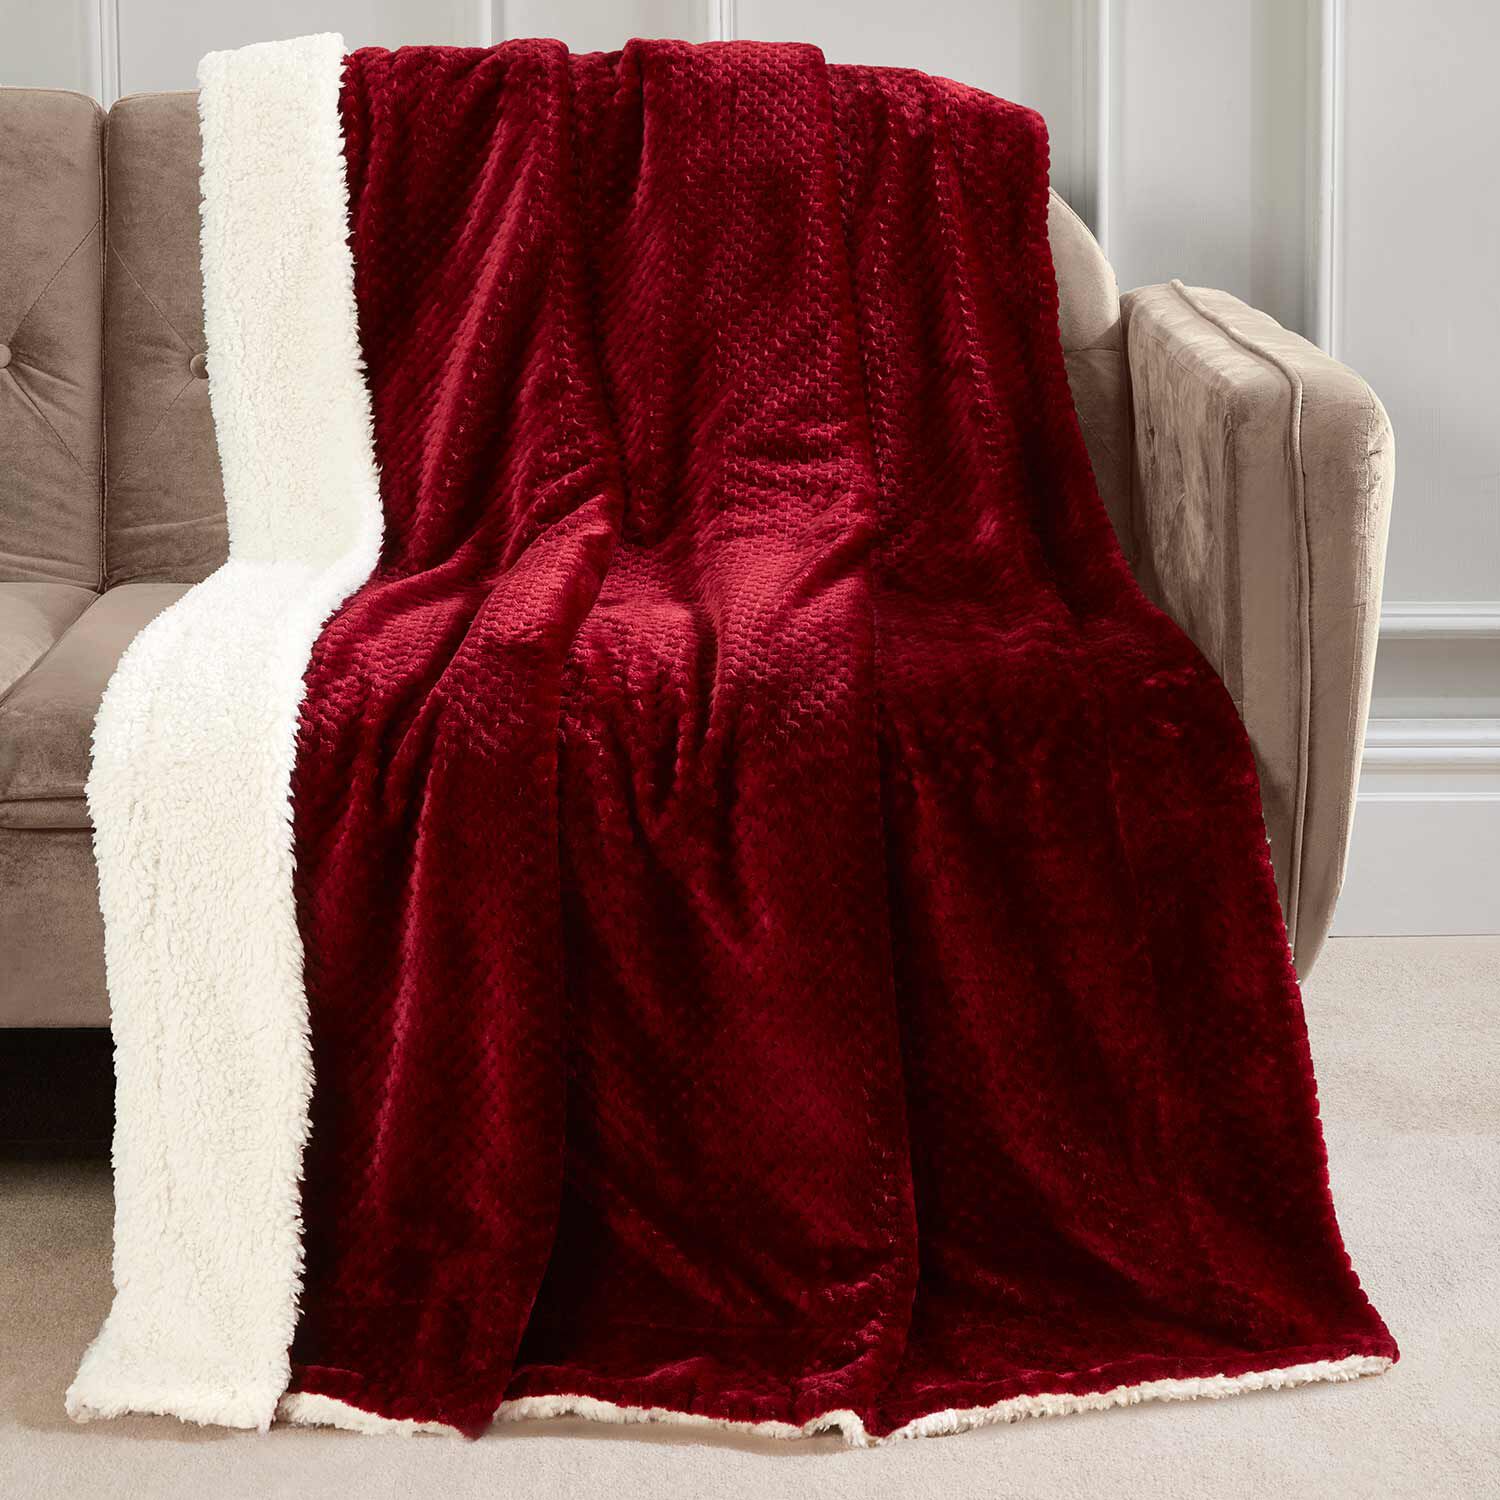 Stay in Tonight Fleece Luxury Blanket Medium Fleece Blanket - Black OAKSTORE My Cat and I Soft Fleece Throw Blanket 60x50